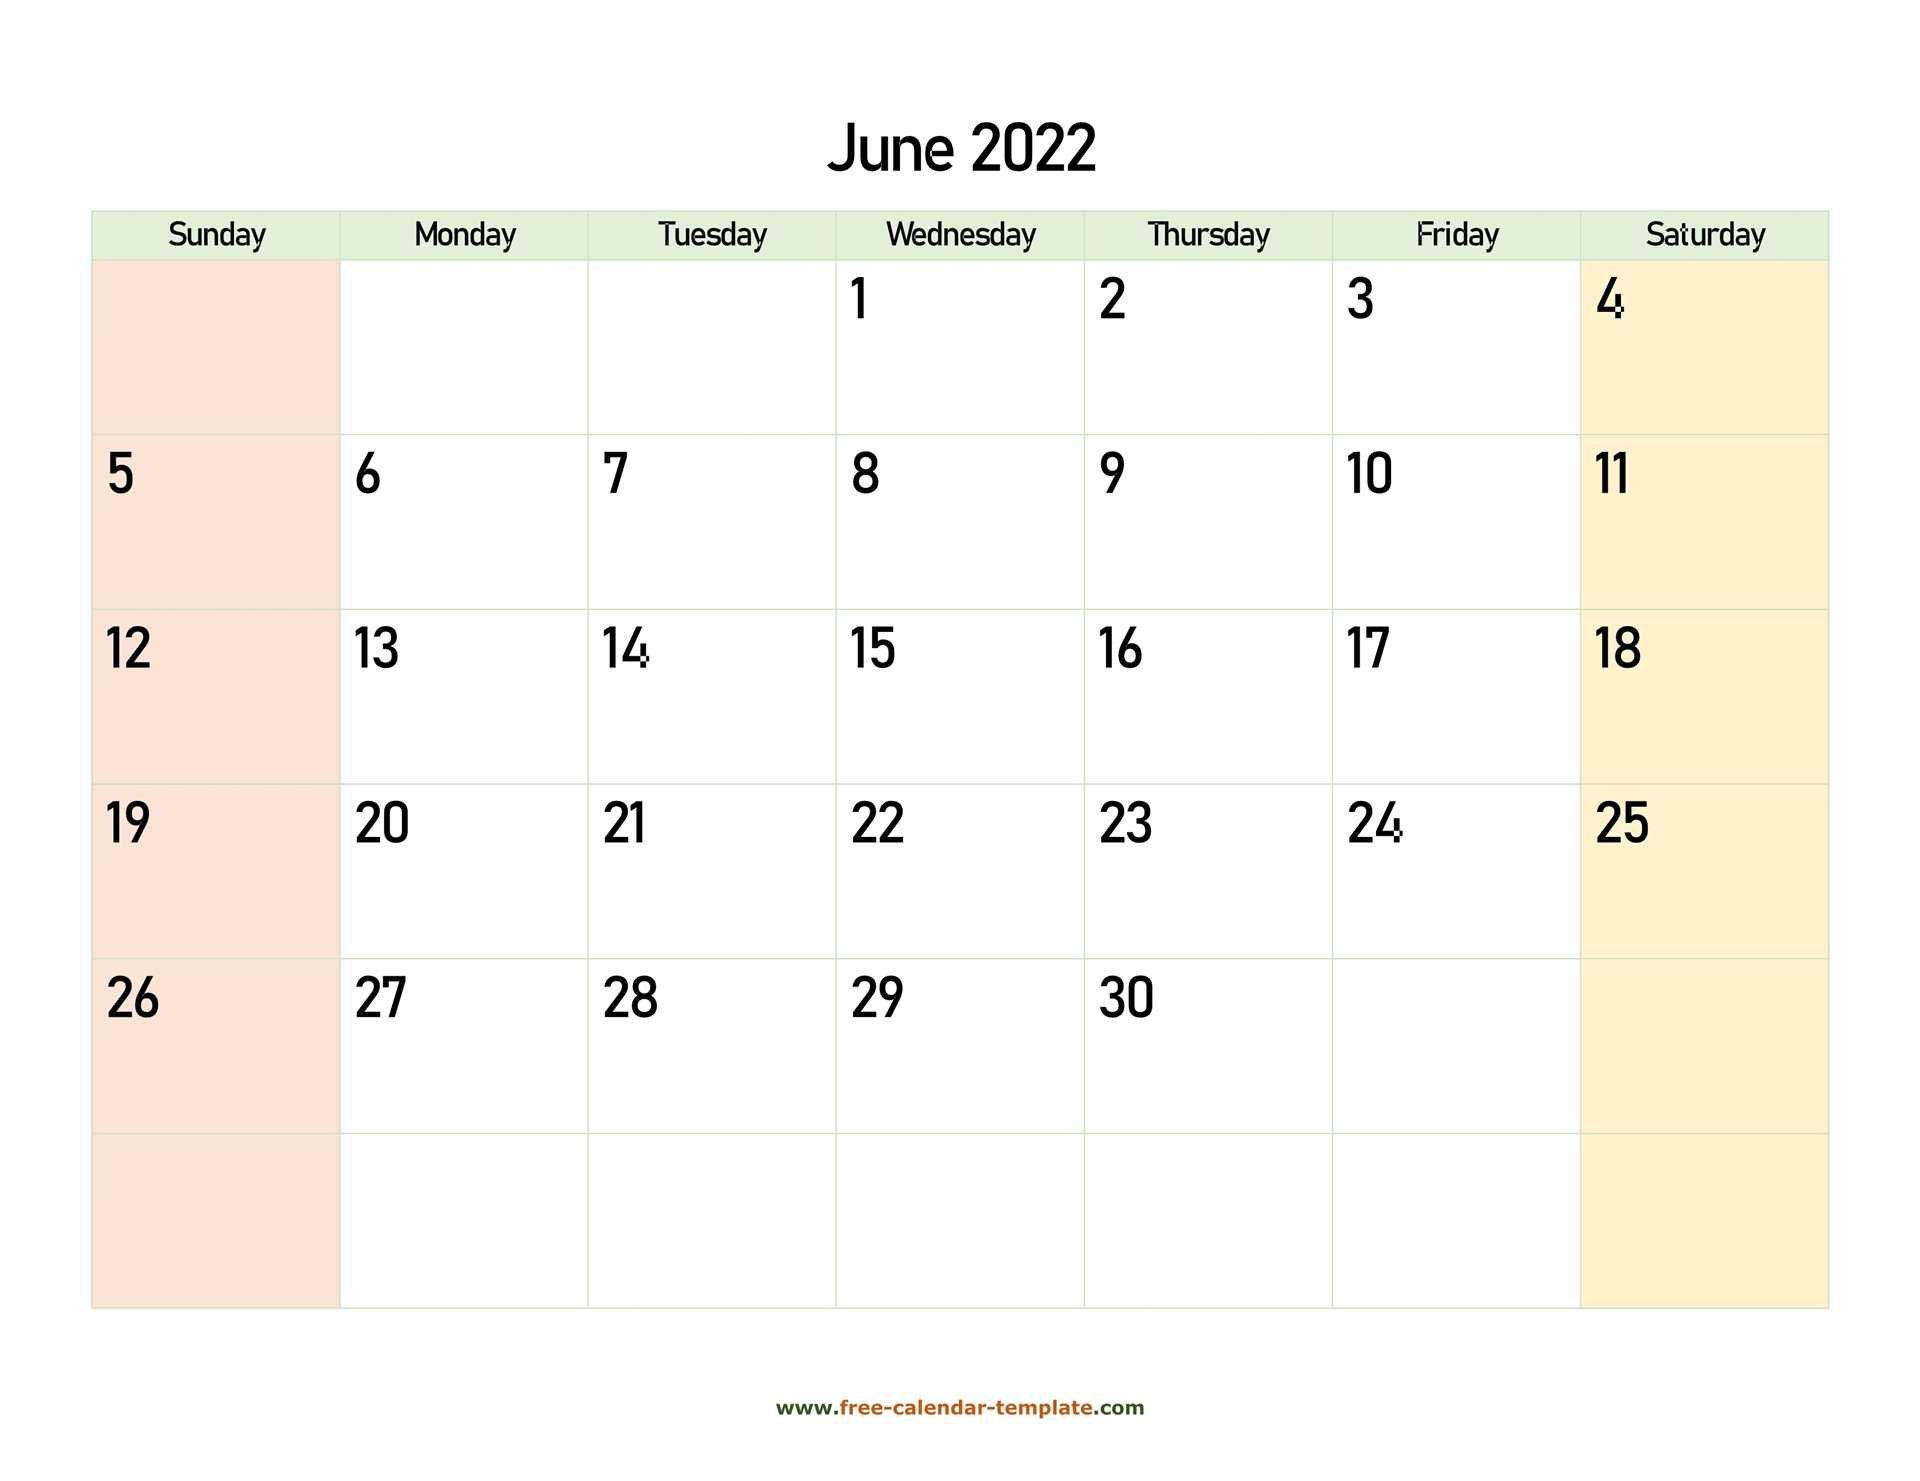 Pick Calendar 2022 June July